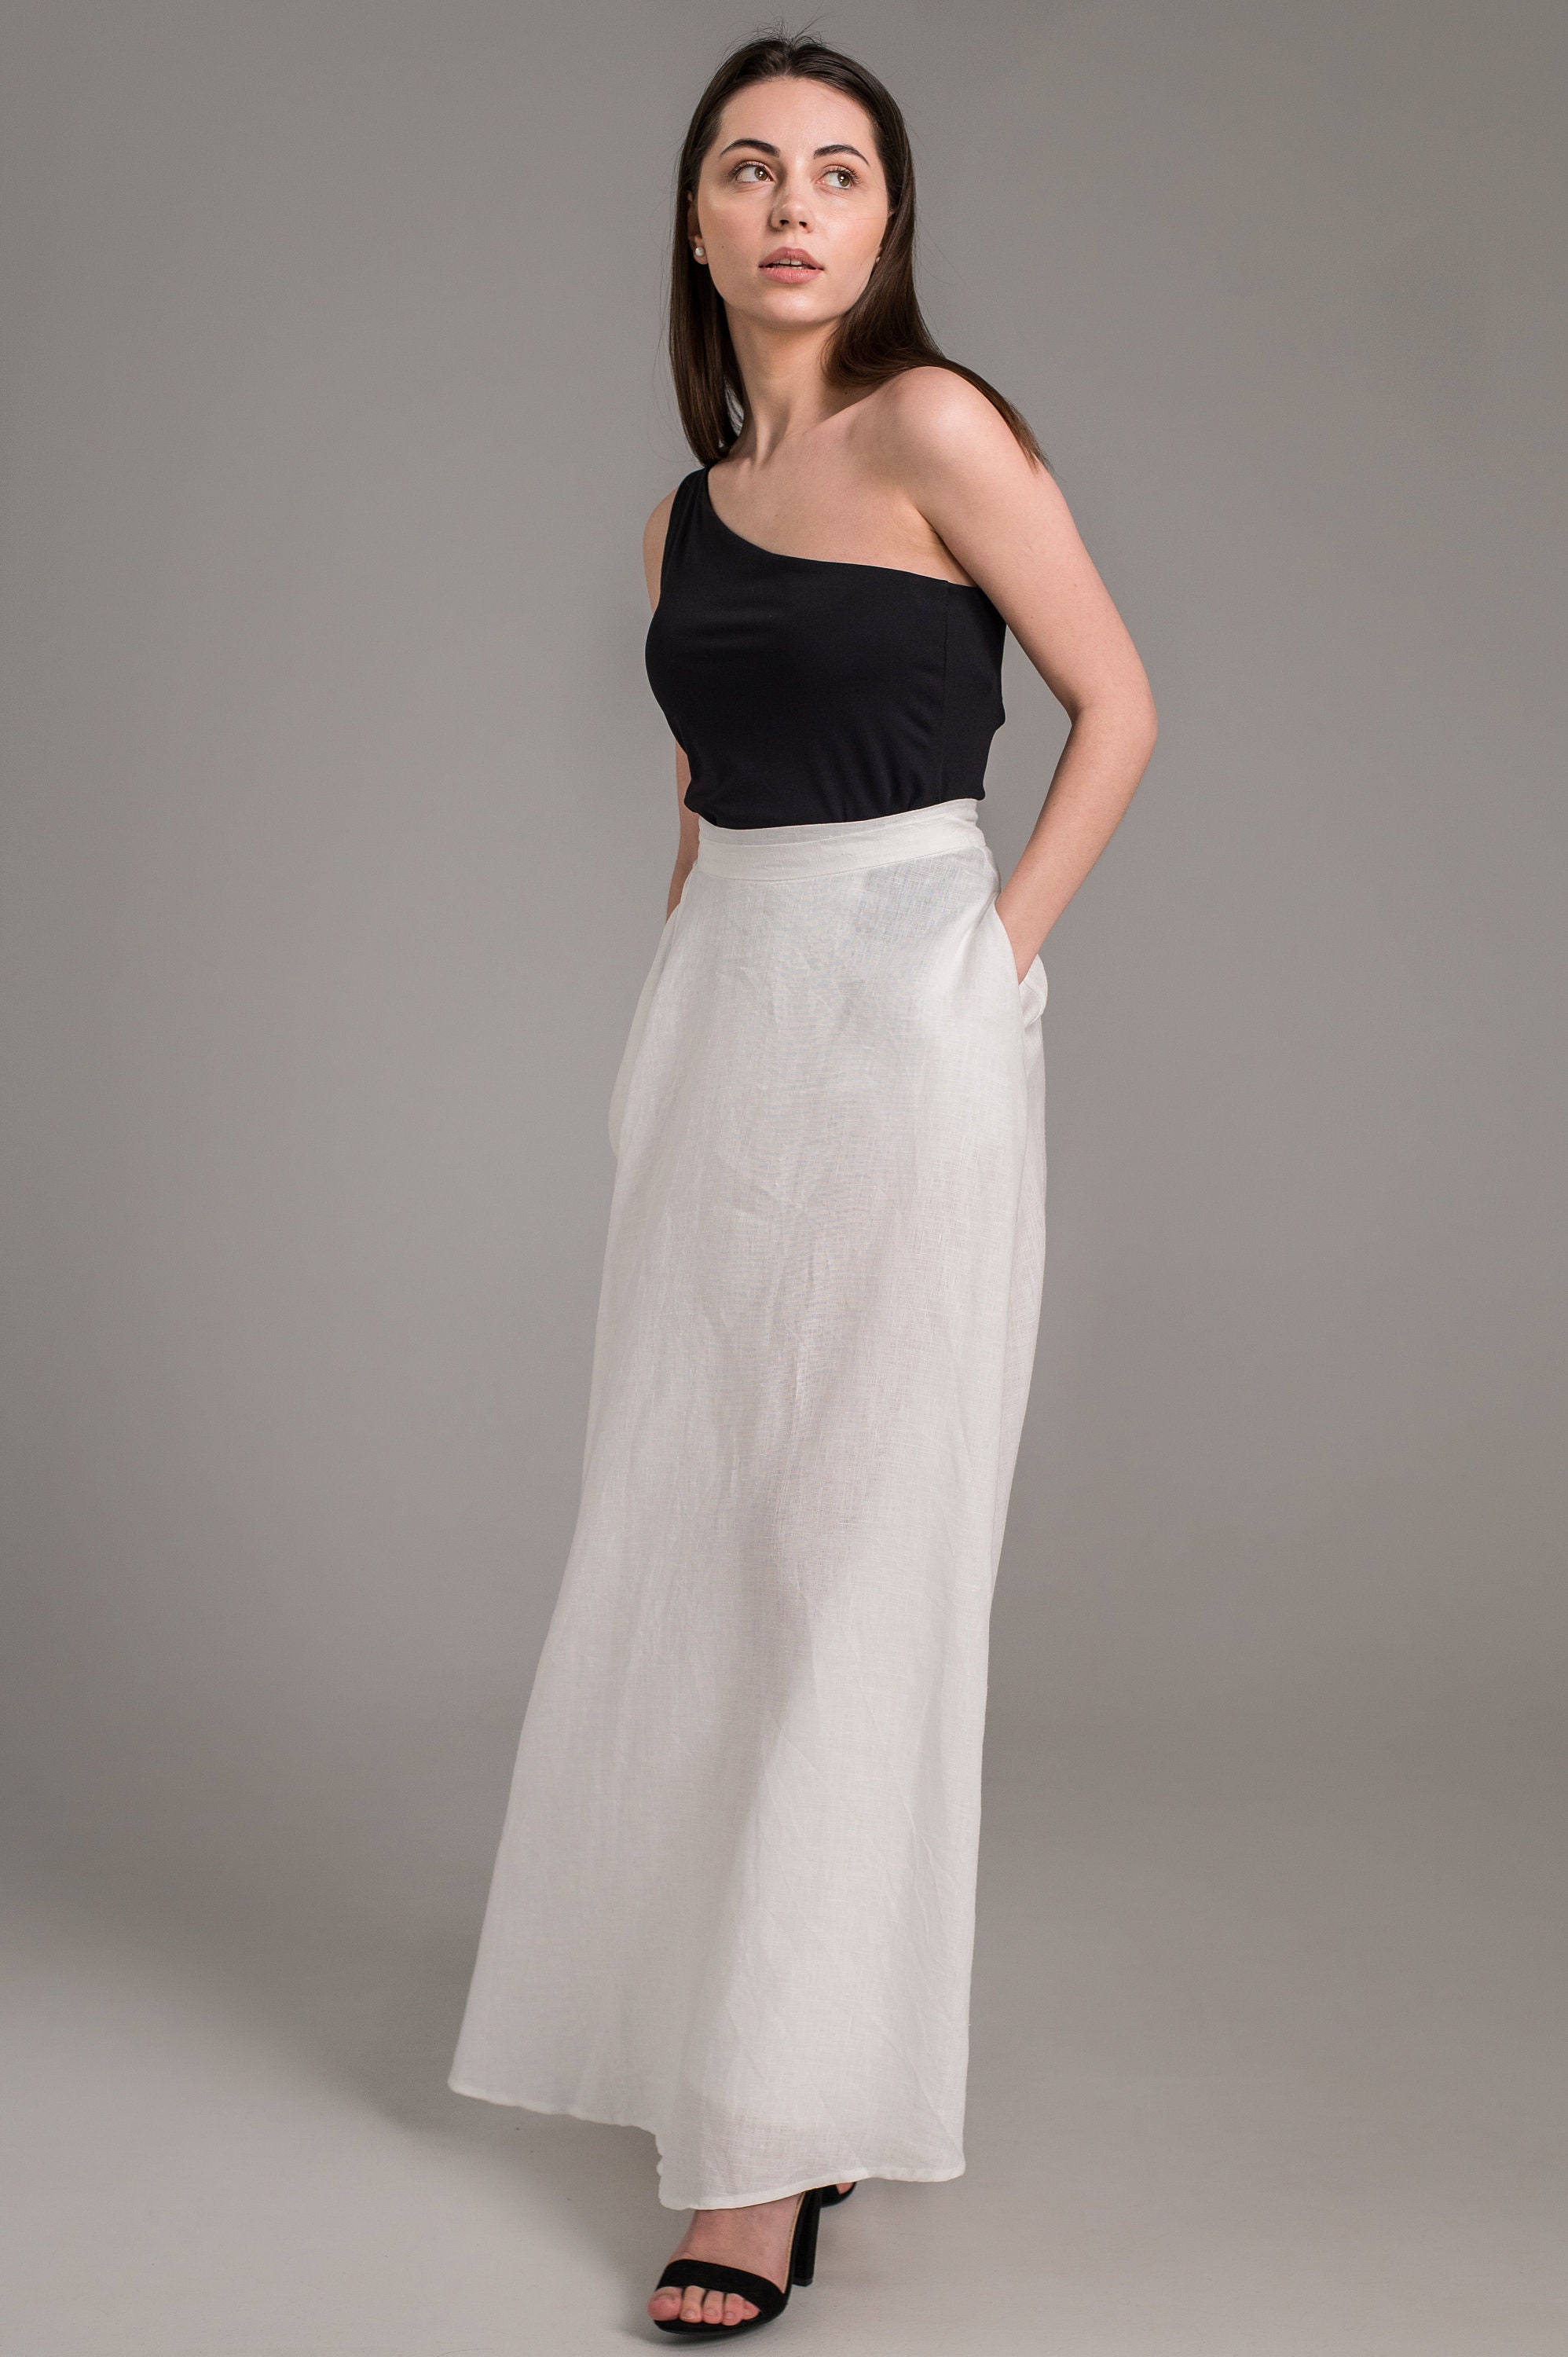 Linen wrap maxi skirt with side hidden pockets / A-line skirt | Etsy